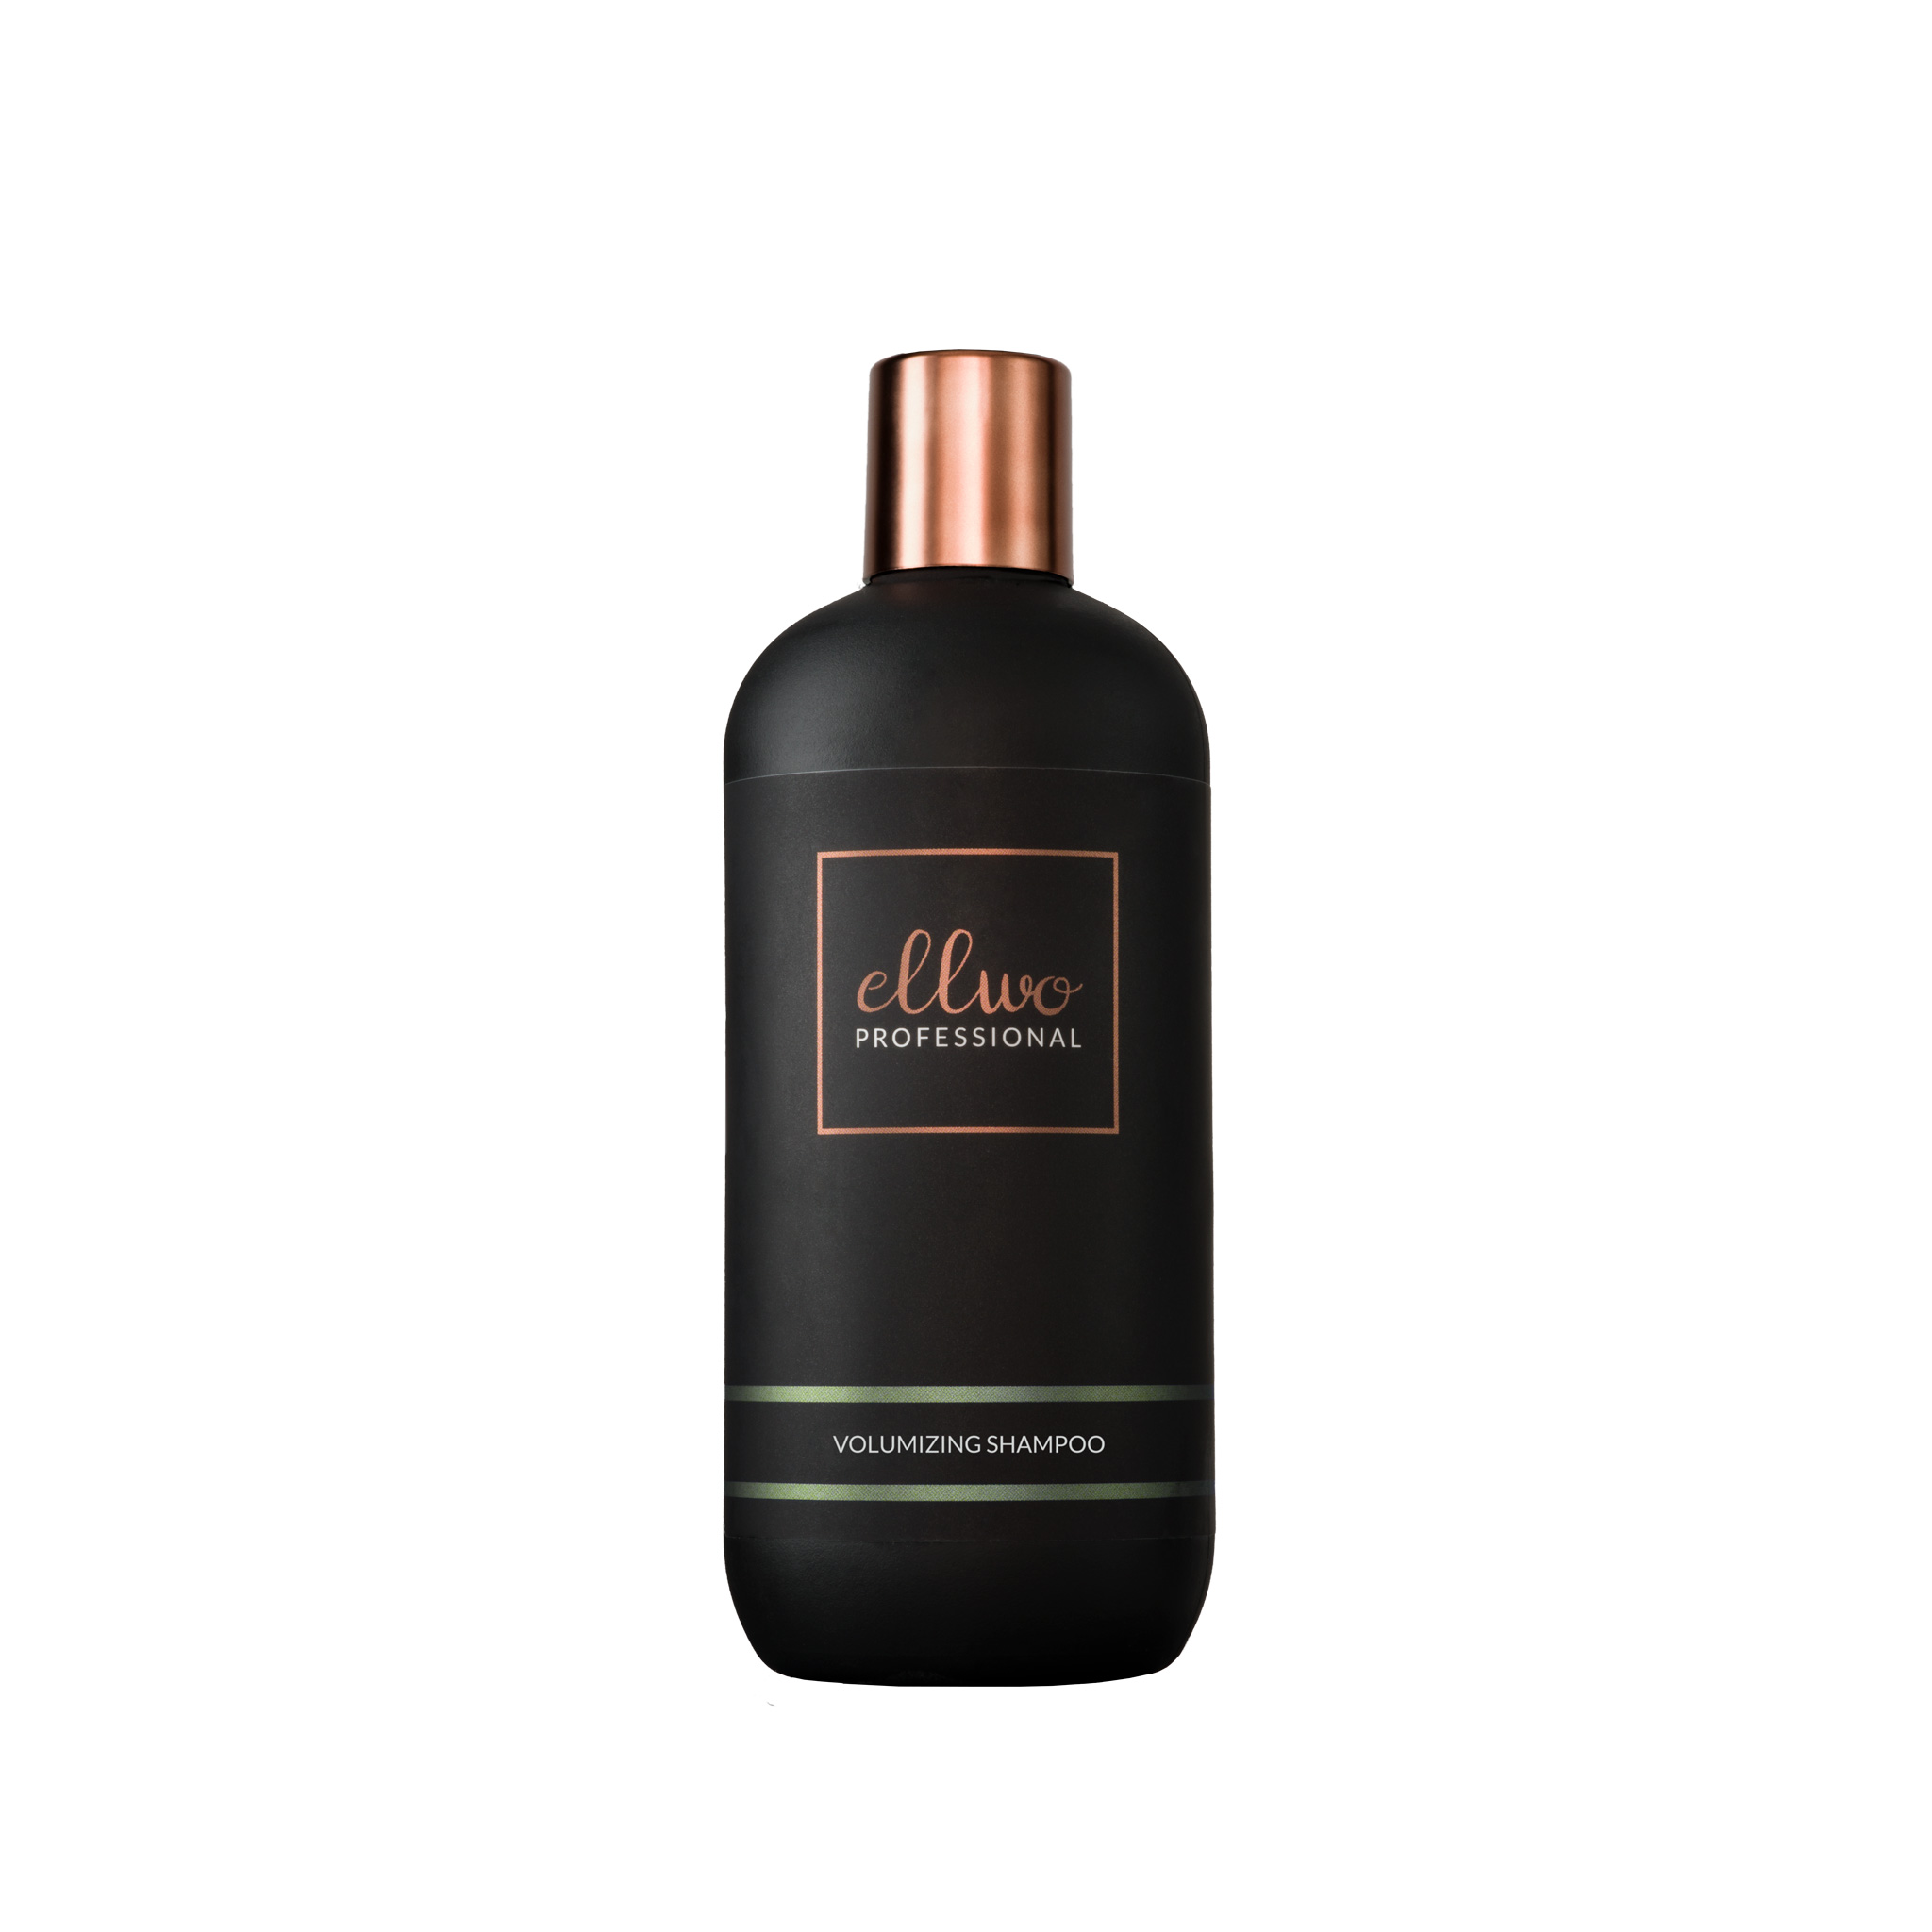 Ellwo Professional Volumizing Shampoo 350 ml